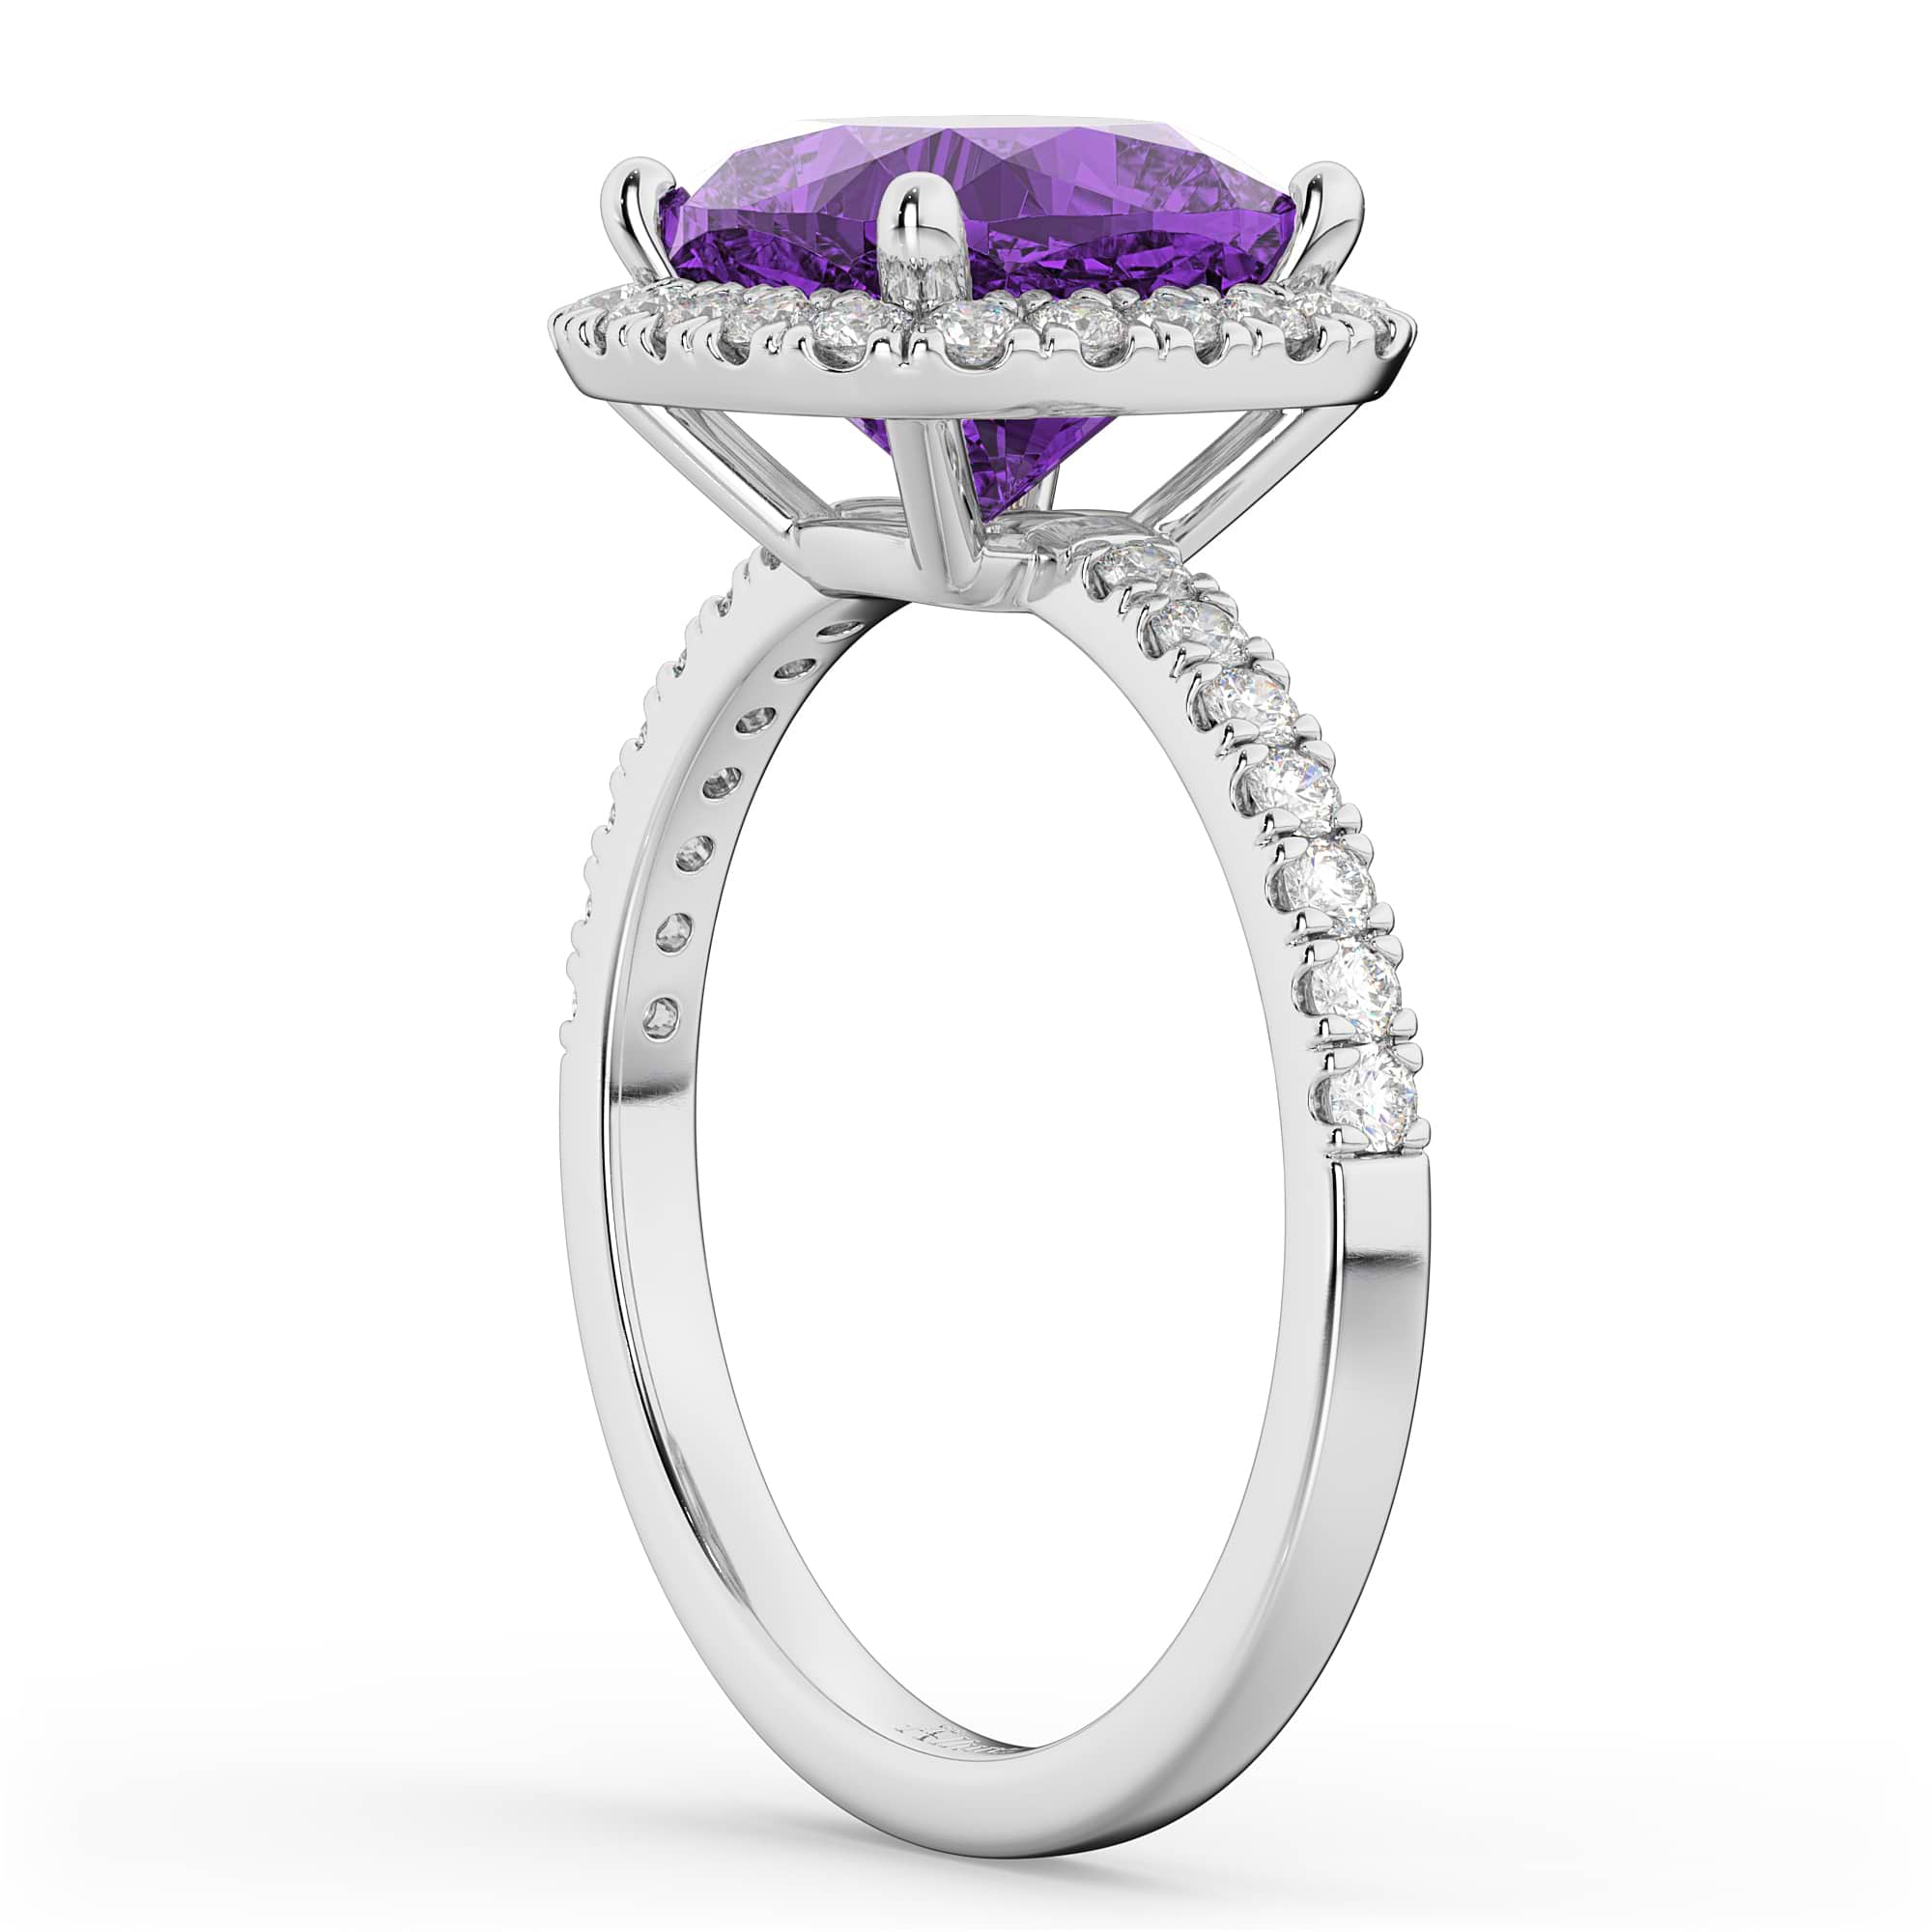 Cushion Cut Halo Amethyst & Diamond Engagement Ring 14k White Gold (3.11ct)